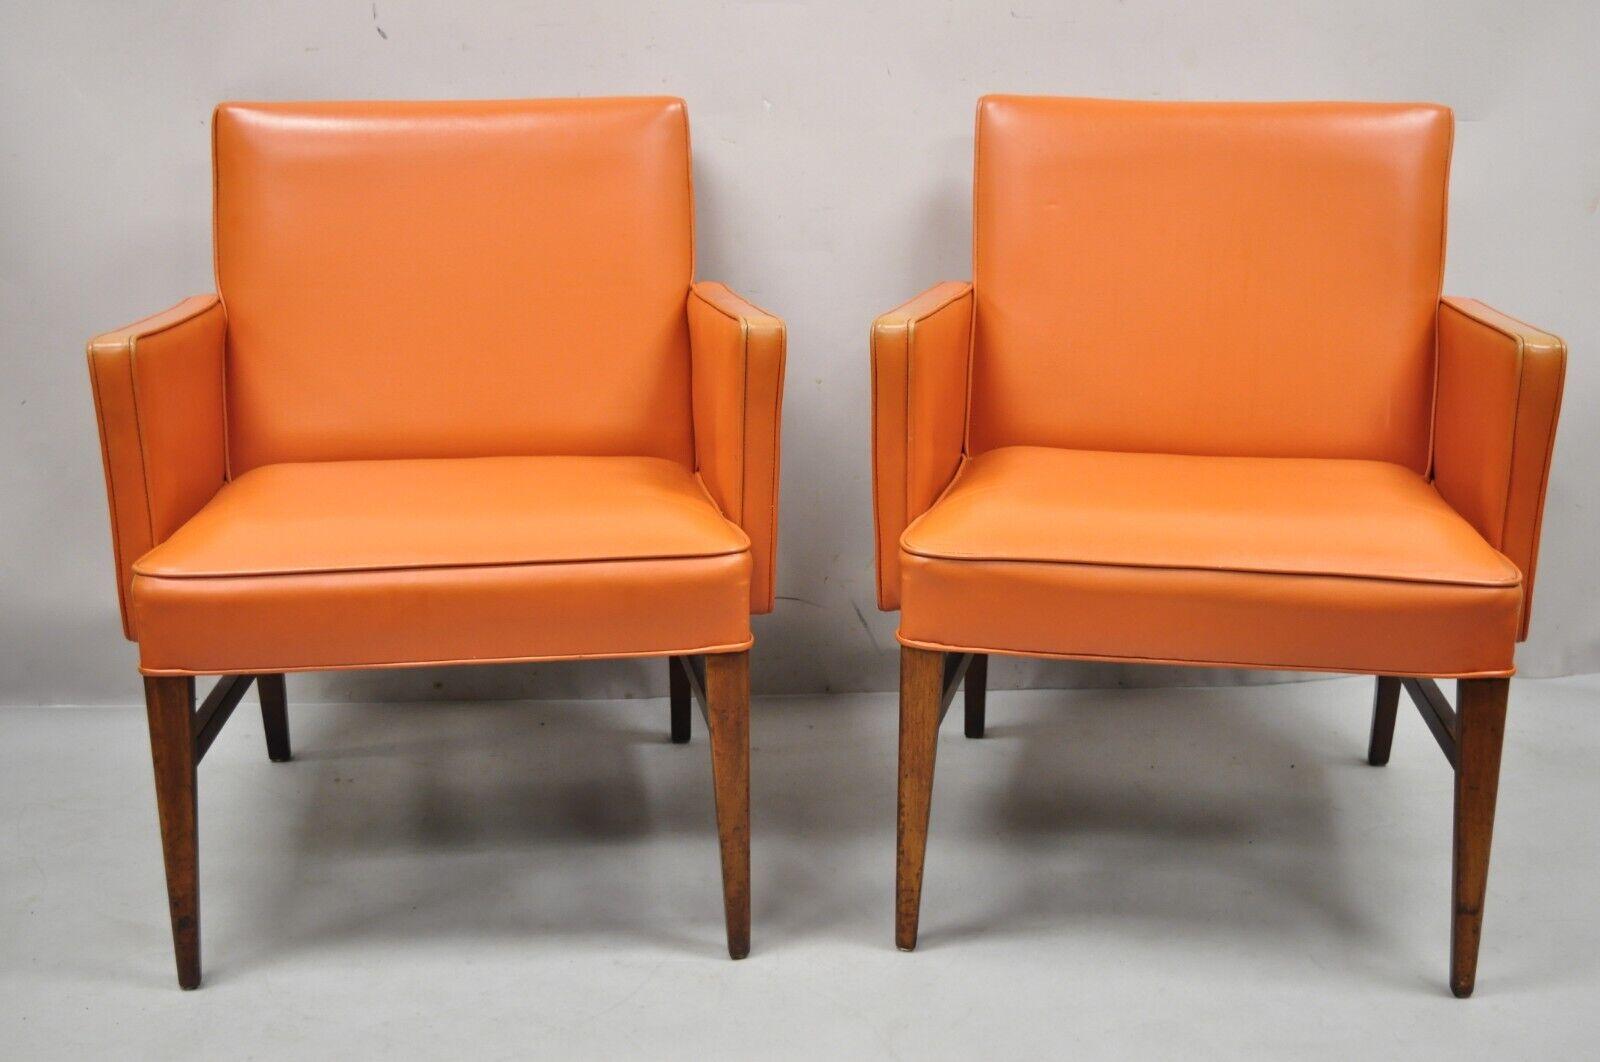 Mid-Century Modern Jens Risom style orange vinyl club lounge chair - a pair. Item features original orange Naugahyde upholstery, solid wood frames, tapered legs, clean Modernist lines, very nice vintage pair. Circa mid-20th century. Measurements: